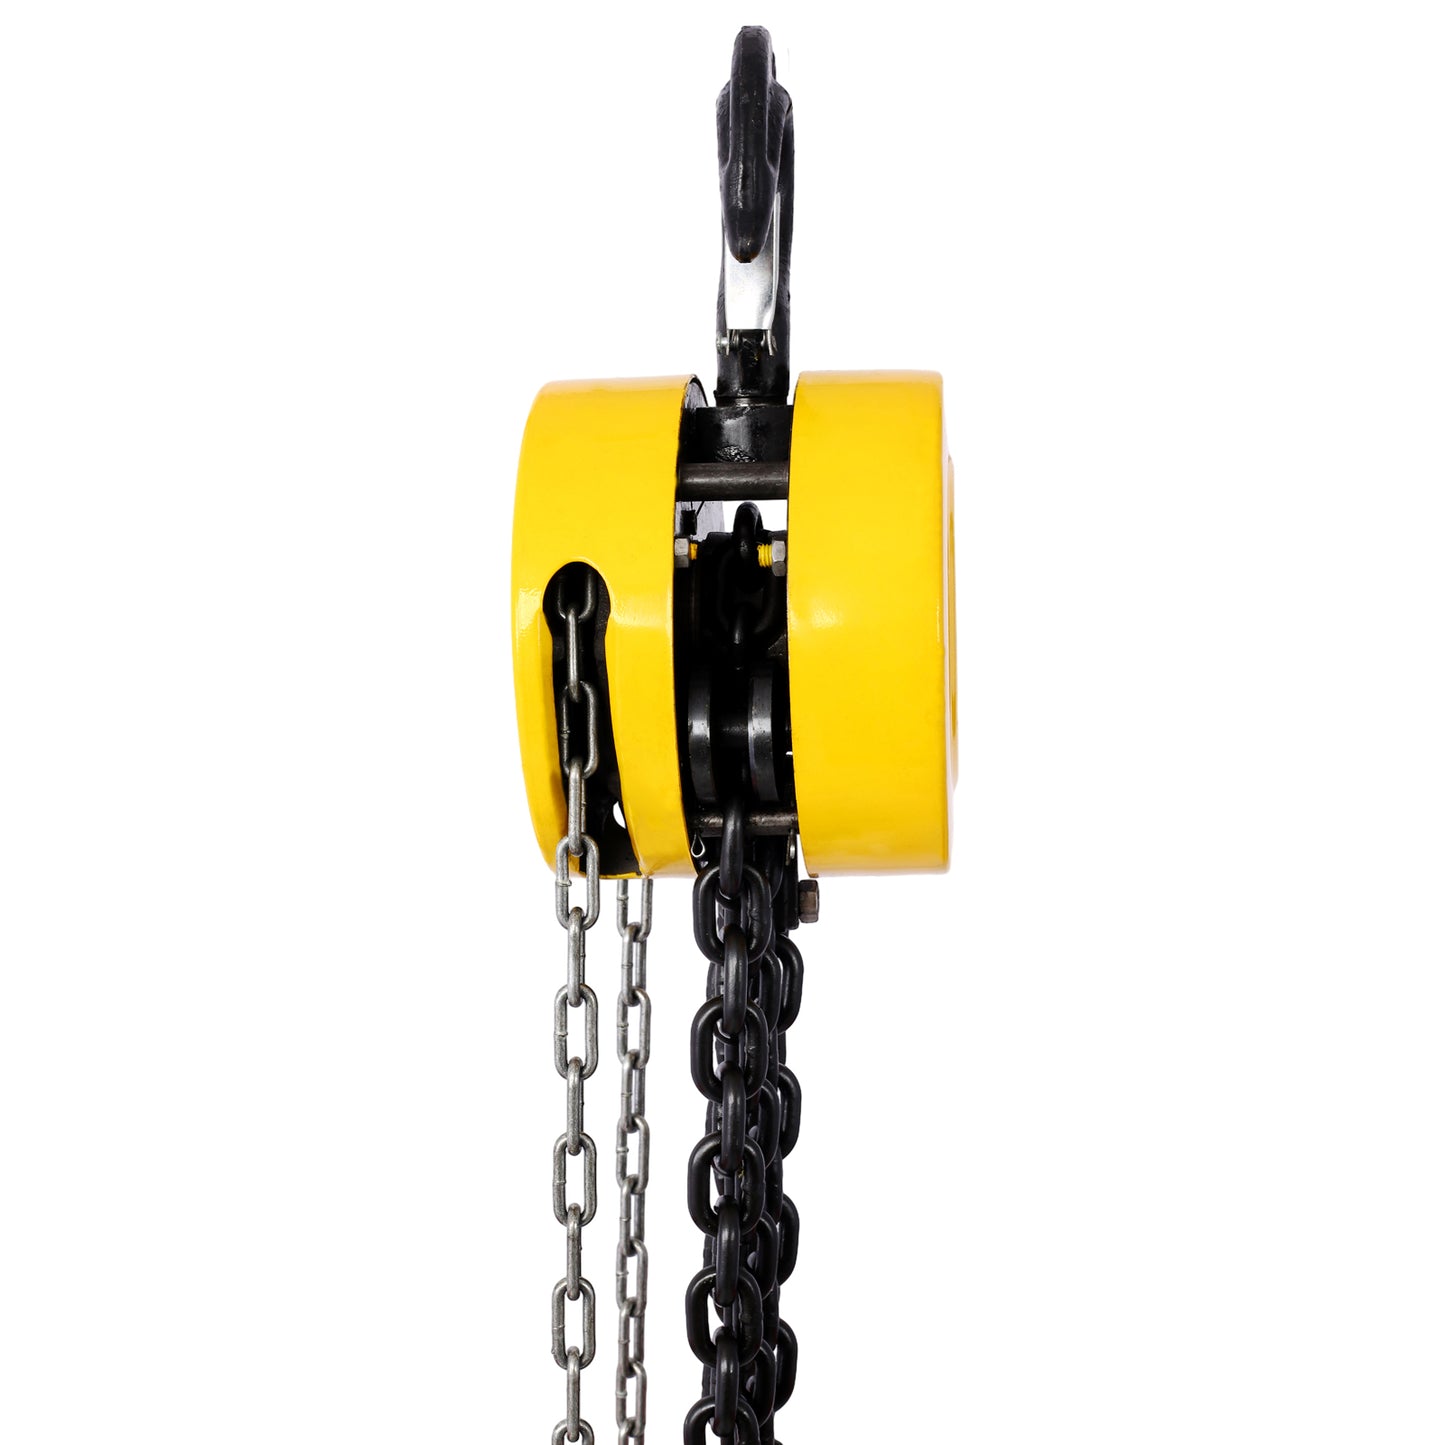 Chain hoist 4400lbs 2T capacity 10ft wIth 2 heavy duty hooks,Manual chain hoist steel construction,Yellow